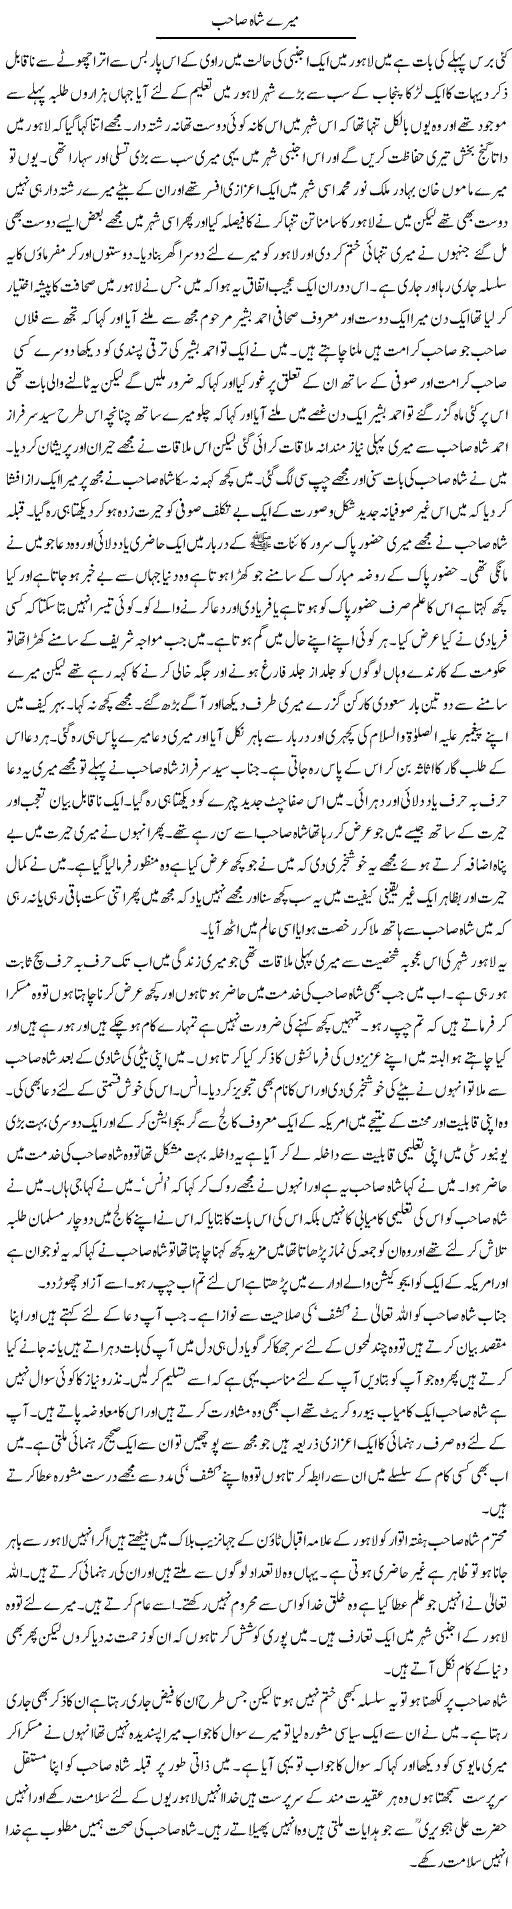 Mere Shah Sahib | Abdul Qadir Hassan | Daily Urdu Columns